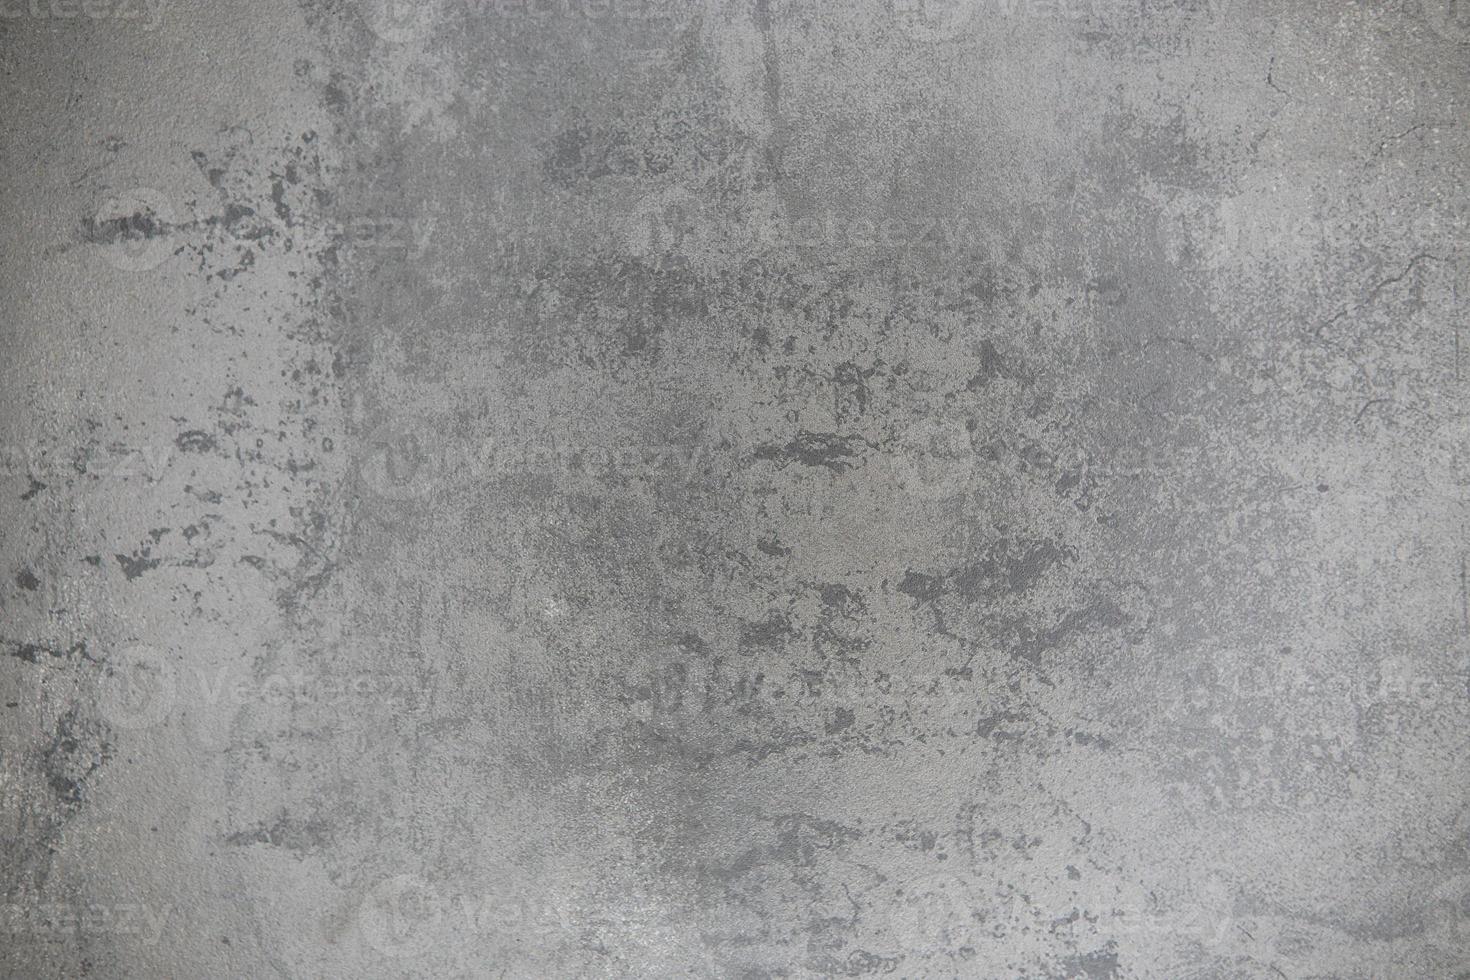 Photo of a grunge concrete texture.